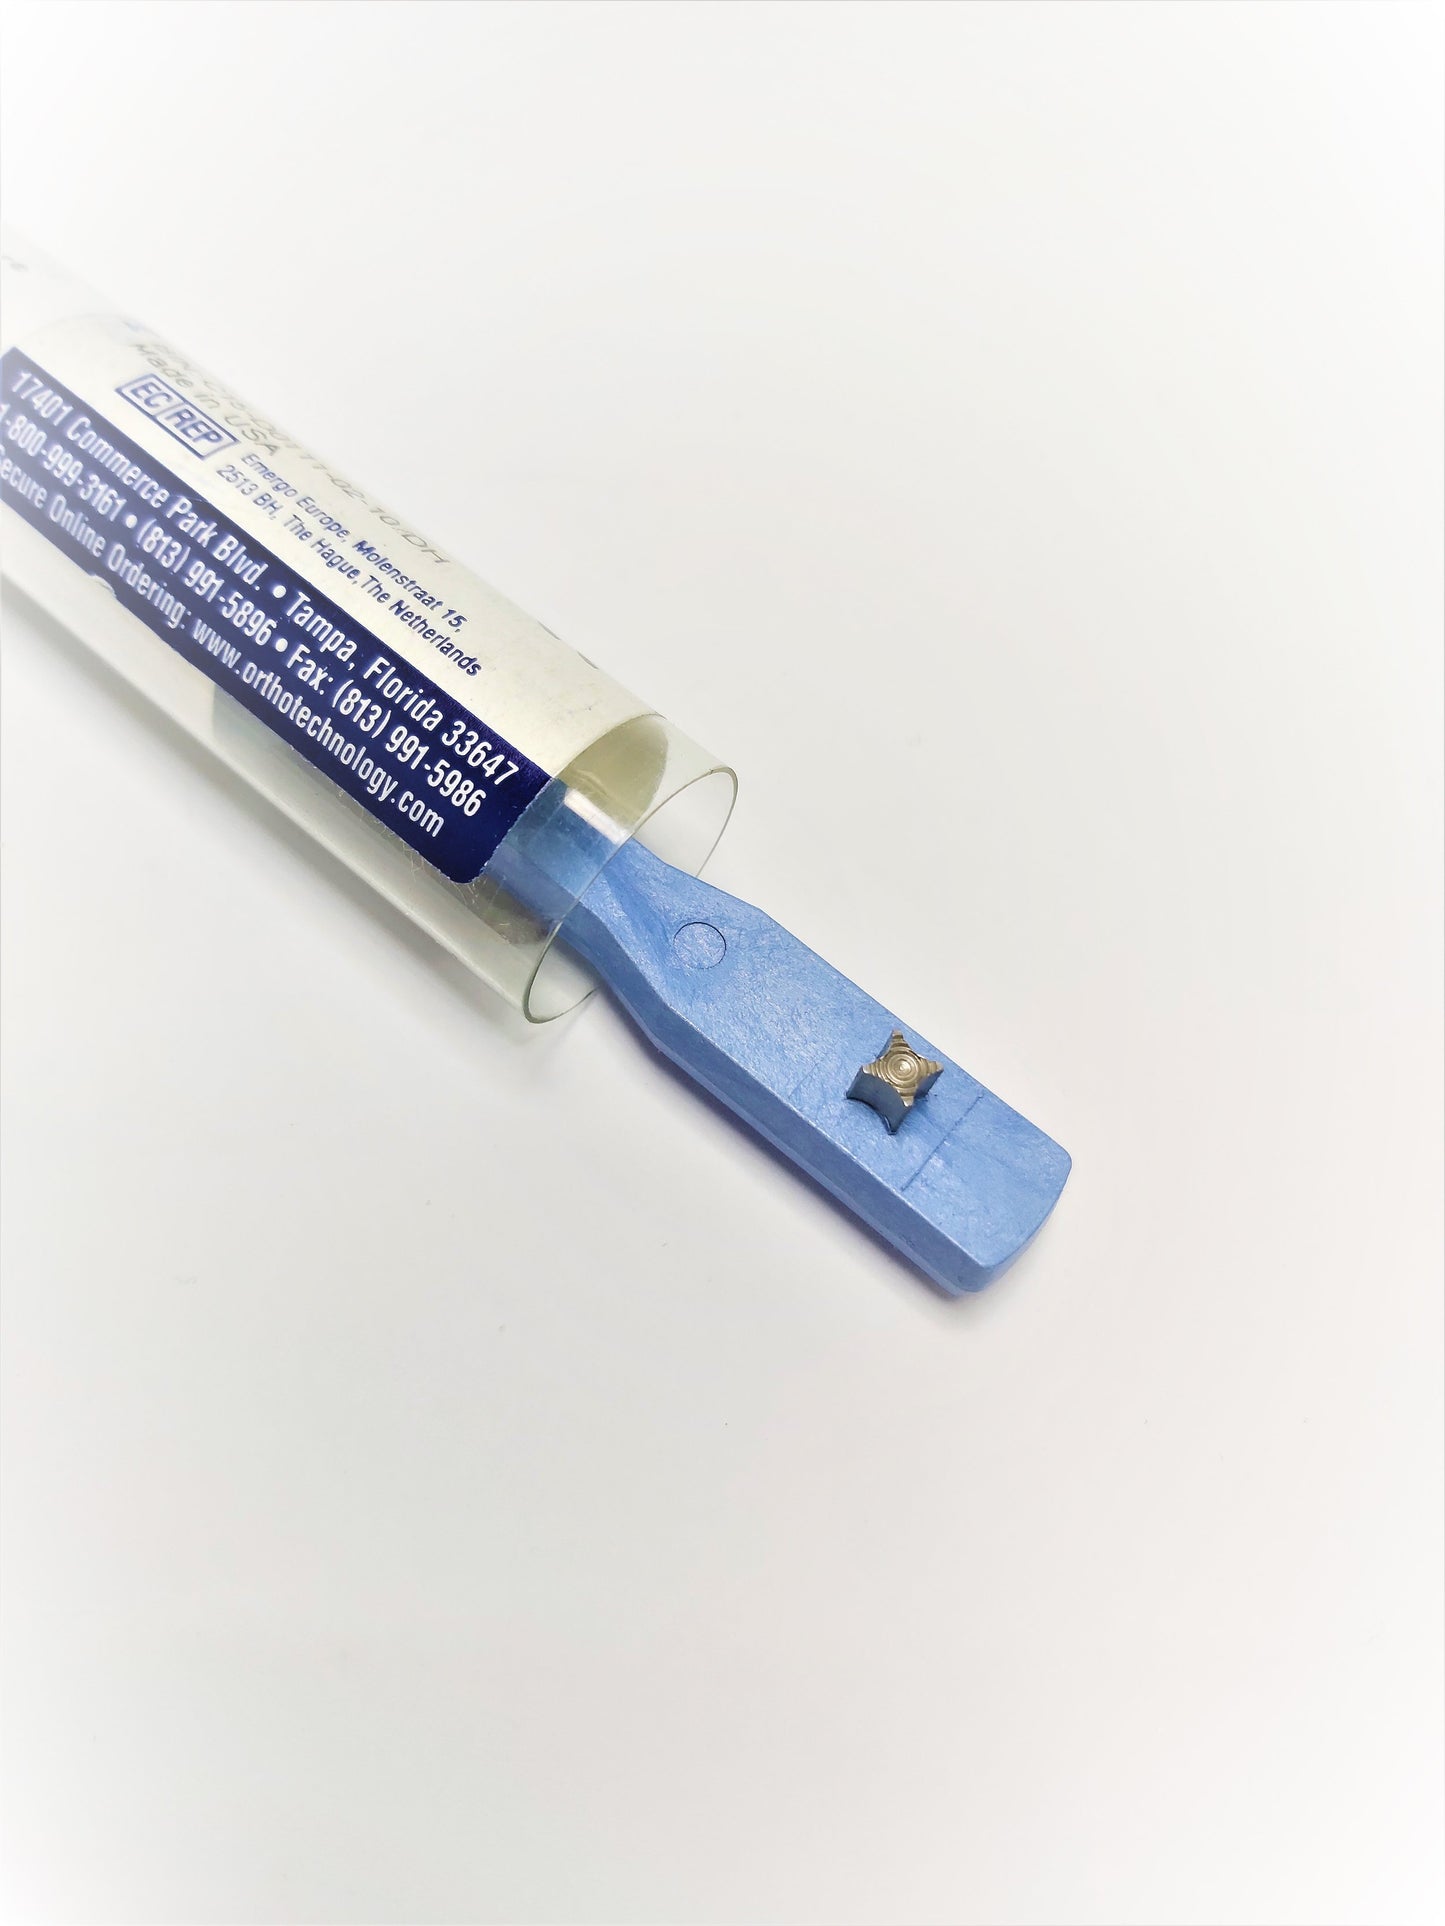 High Heat Bite Stick Star Tip Sterilizable up to 370'